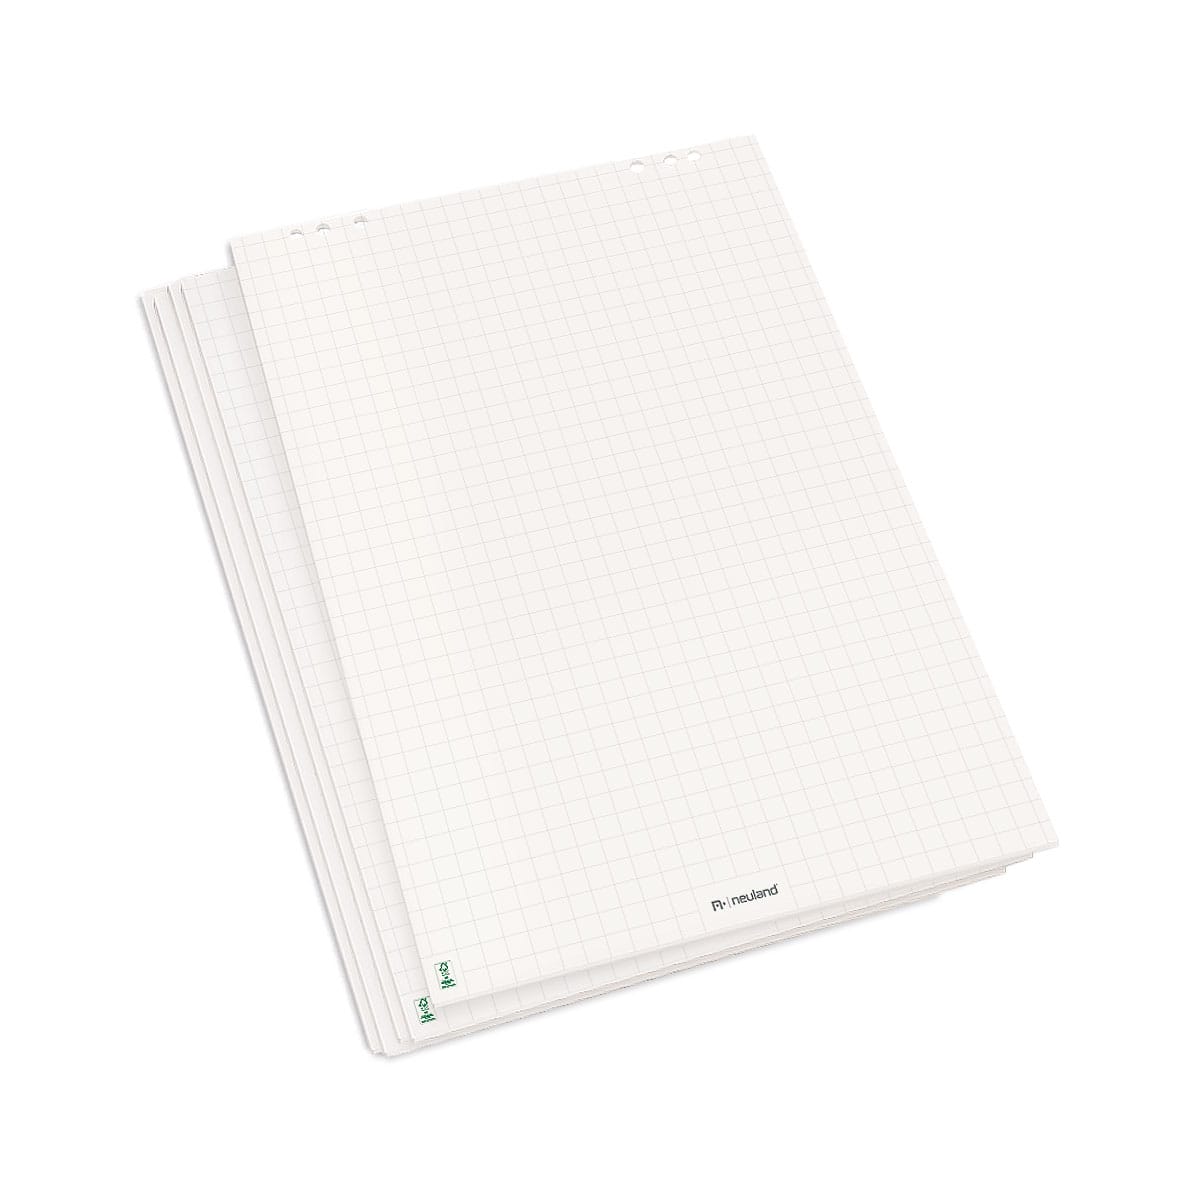 FlipChart Paper bright white, chequered- 5er block (gerollt)